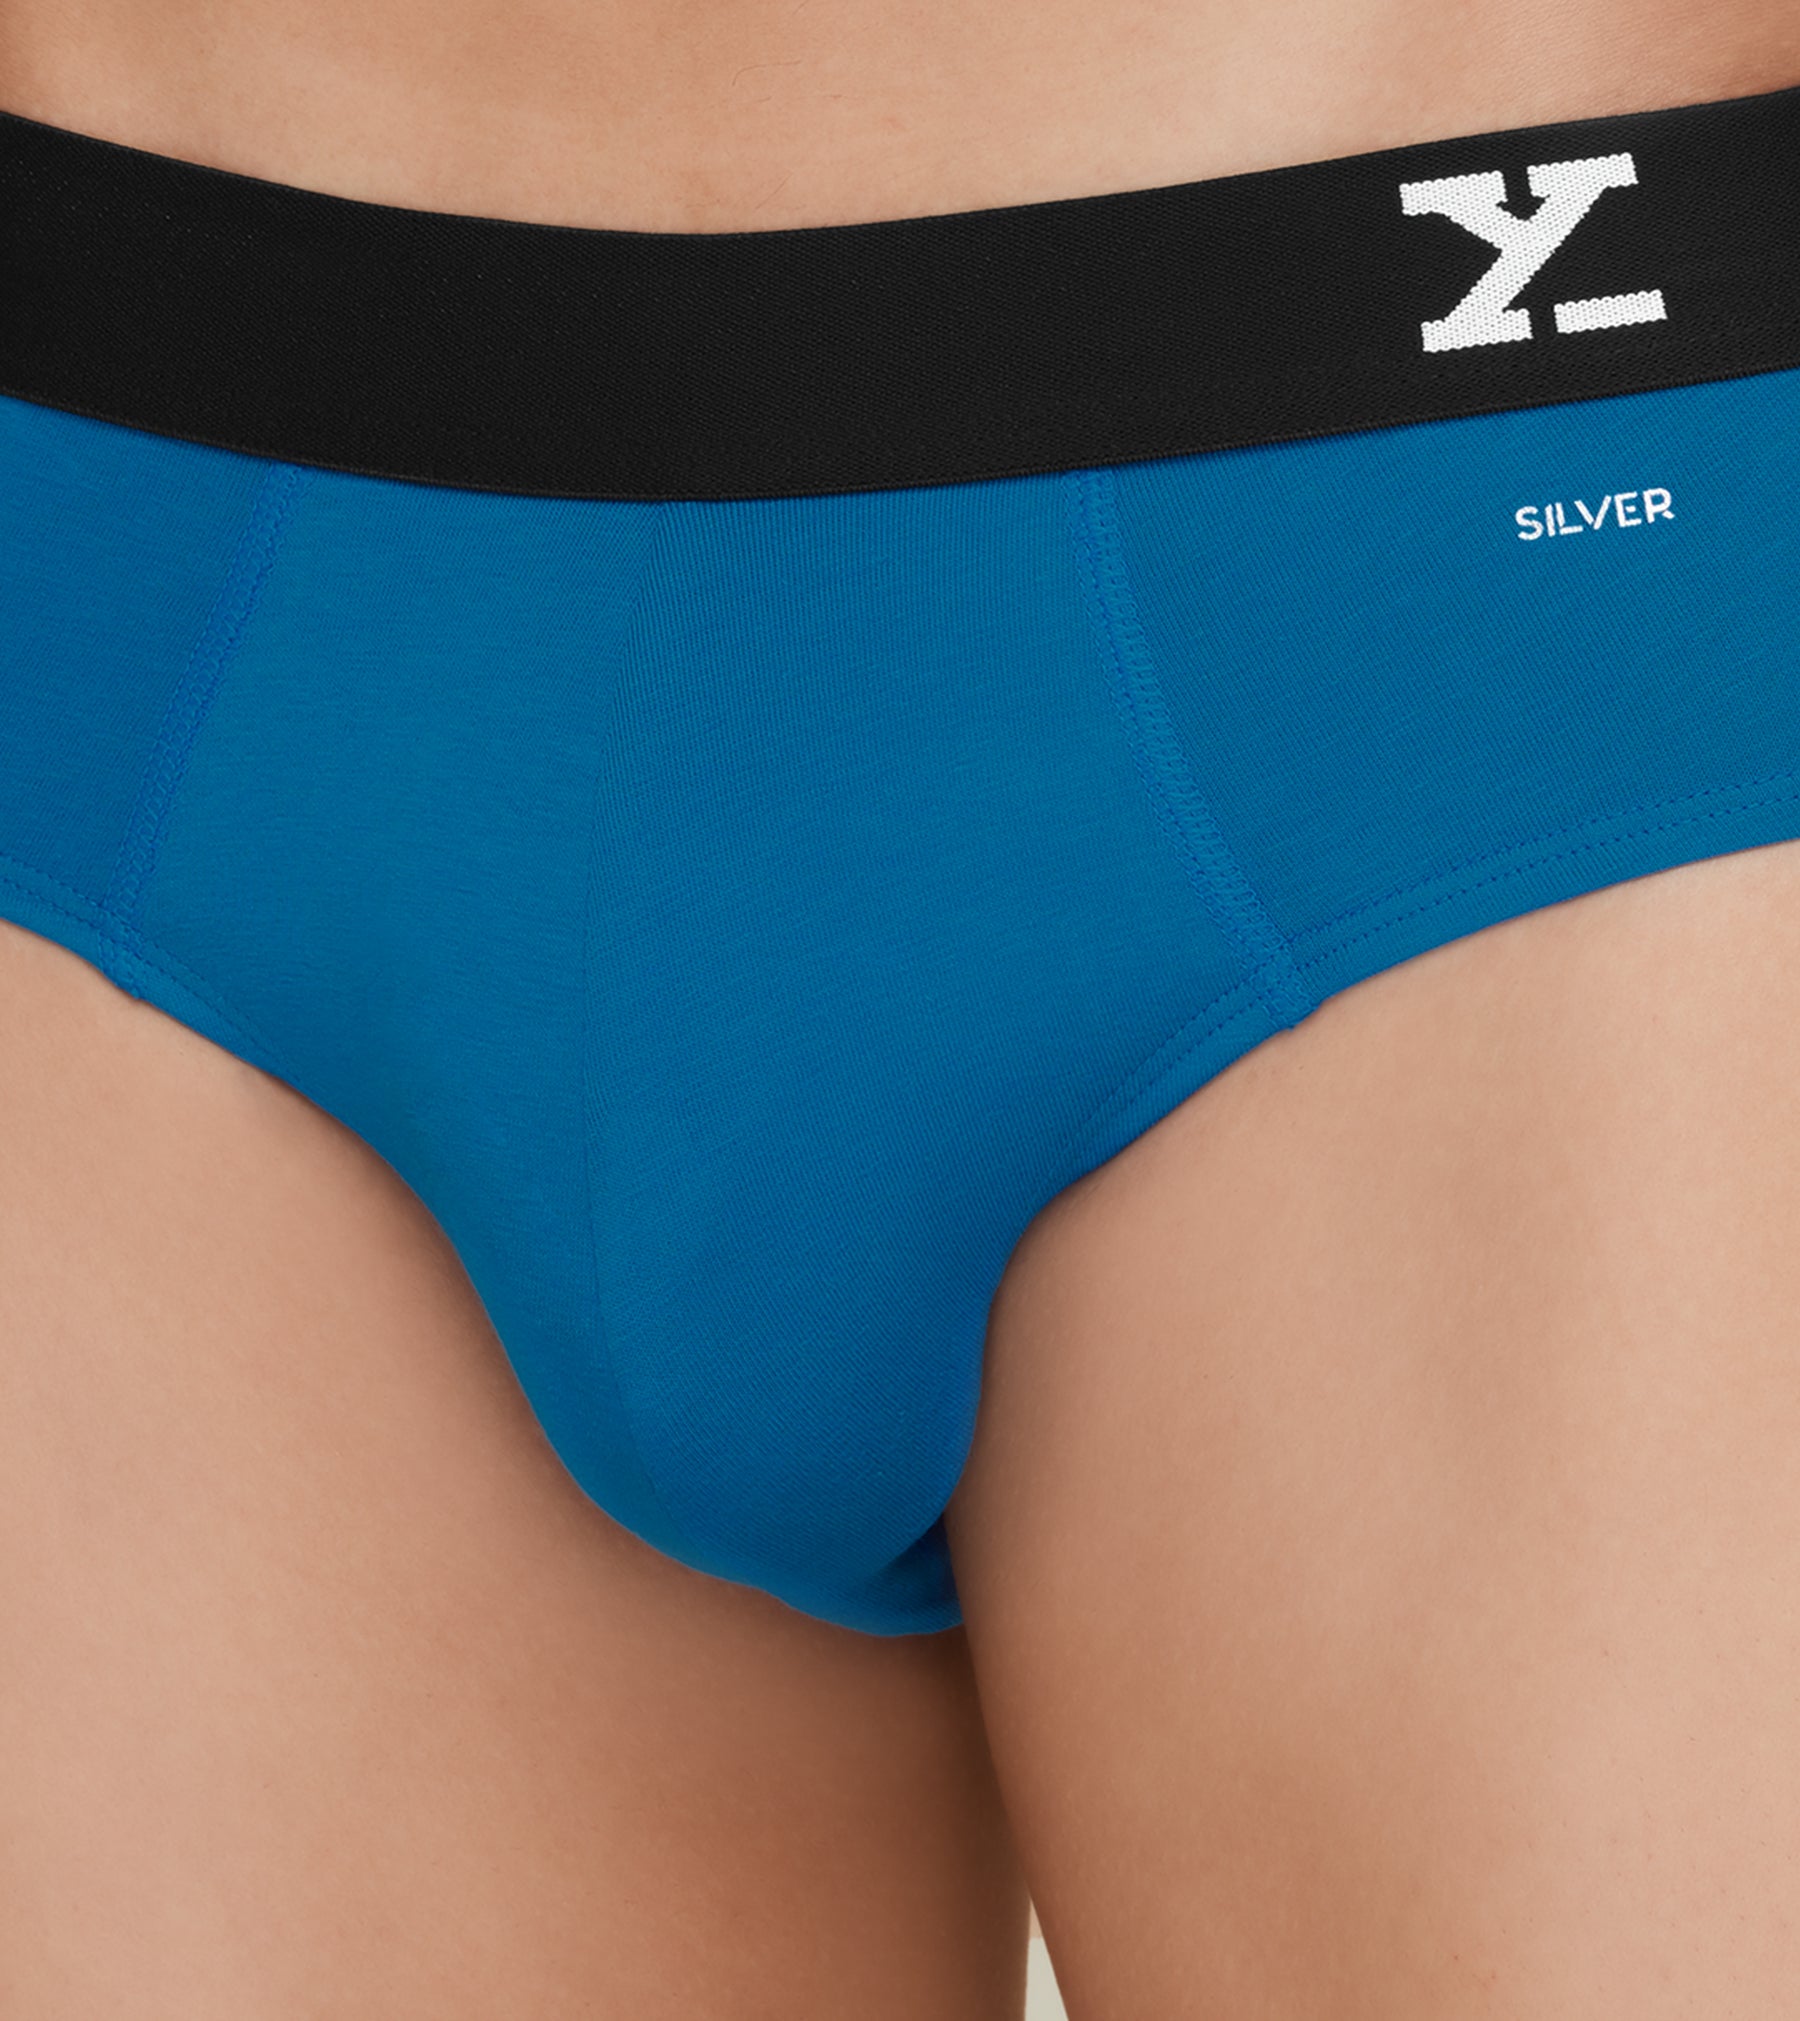 Aero Silver Cotton Briefs For Men Pack of 2(Light Blue, Dark Blue) -  XYXX Mens Apparels